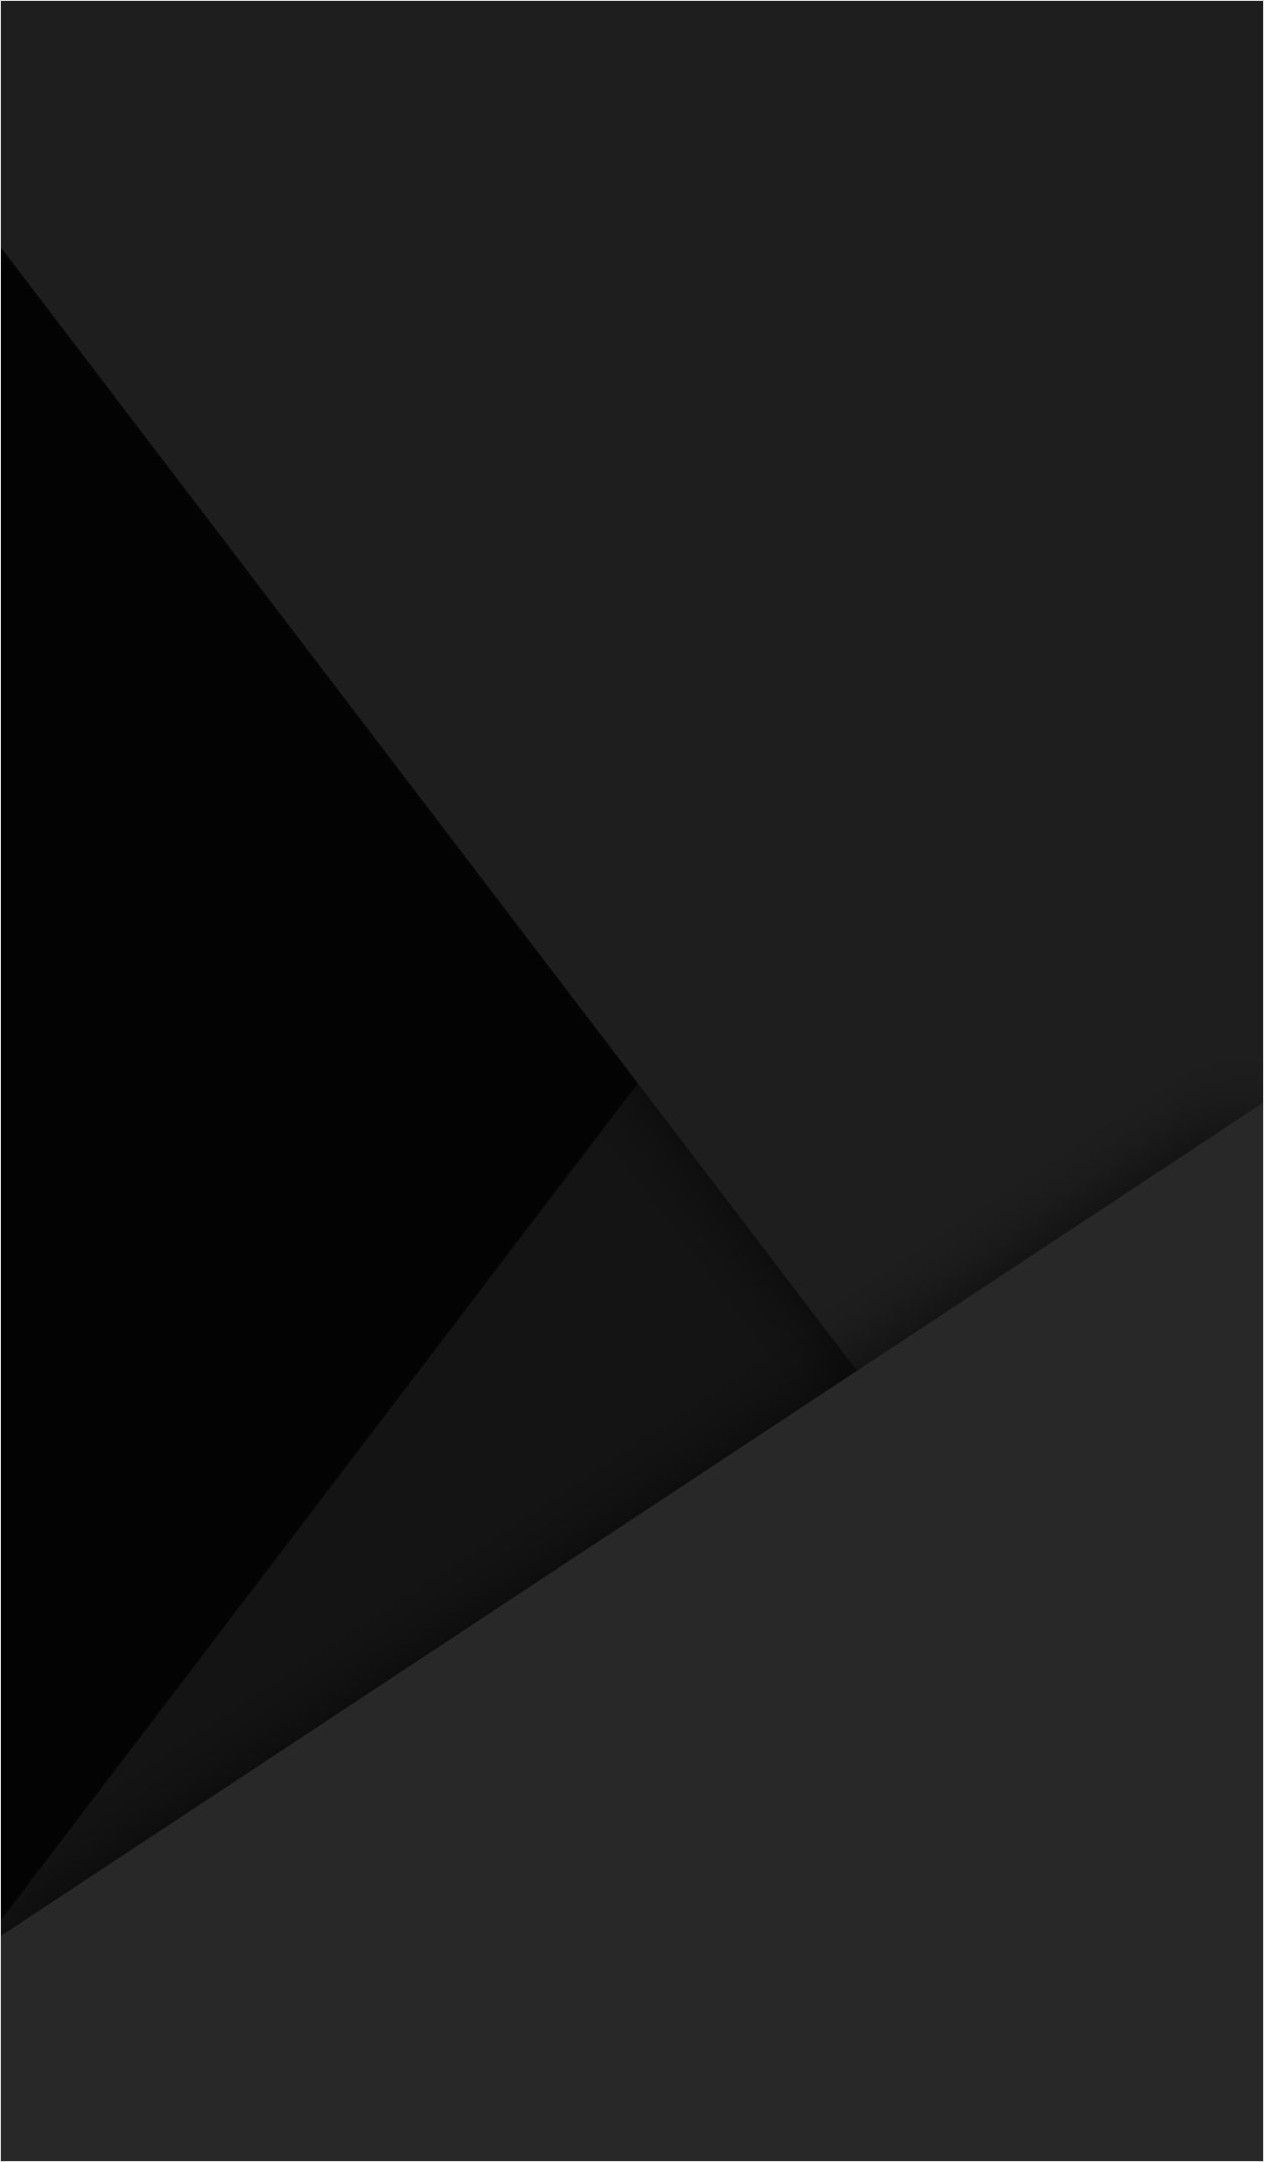 HD Black 4k Mobile Wallpapers - Wallpaper Cave